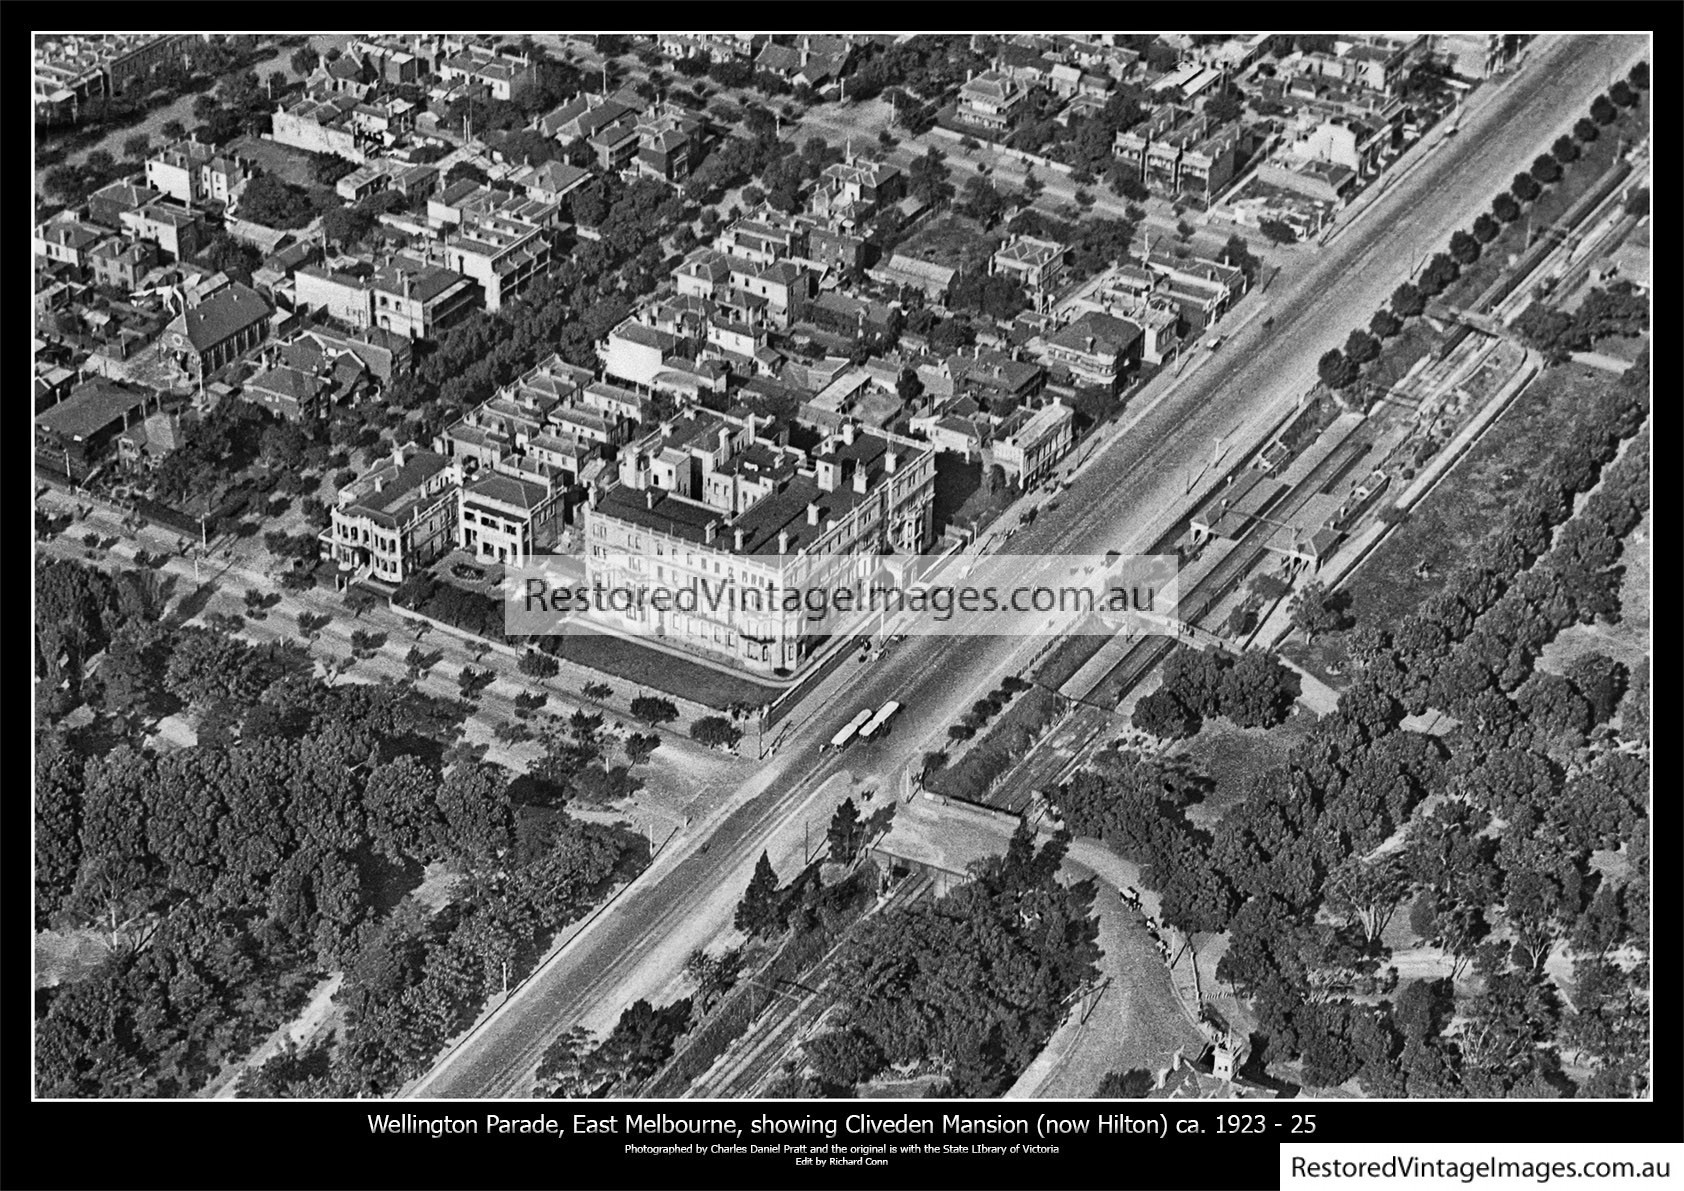 Cliveden Mansion Aerial View 1923-25